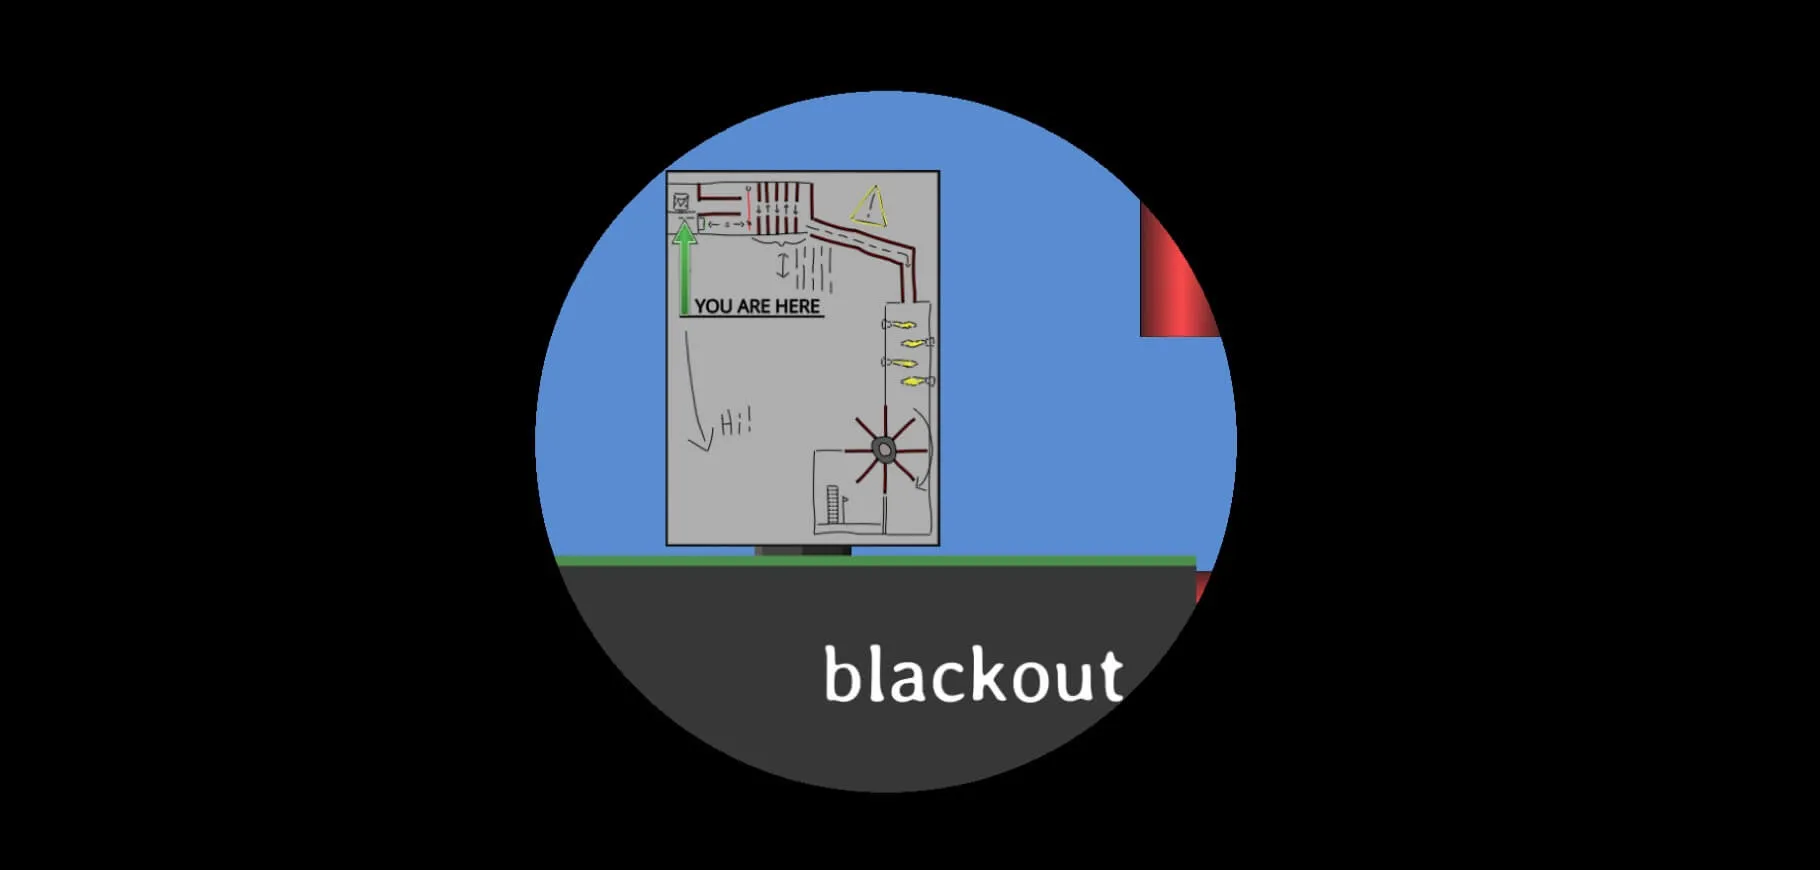 blackout level screenshot from the steam game reflex runner.